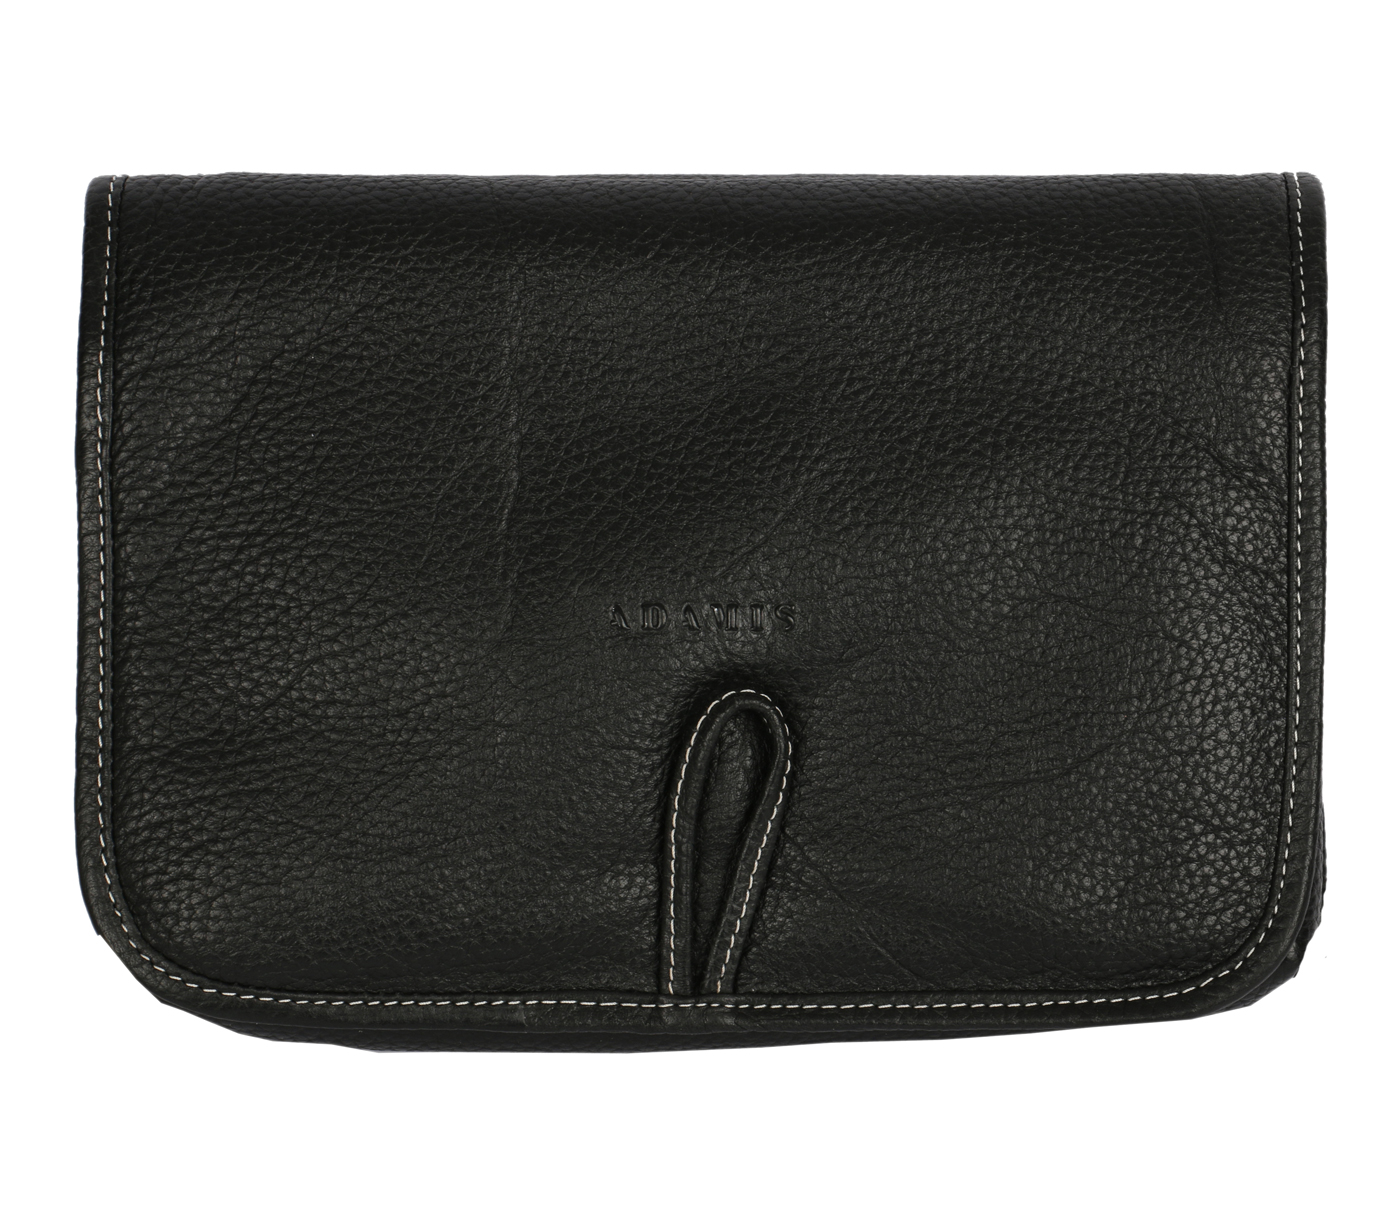 Travel Essential--Unisex Wash & Toiletry travel Bag in Genuine Leather - Black